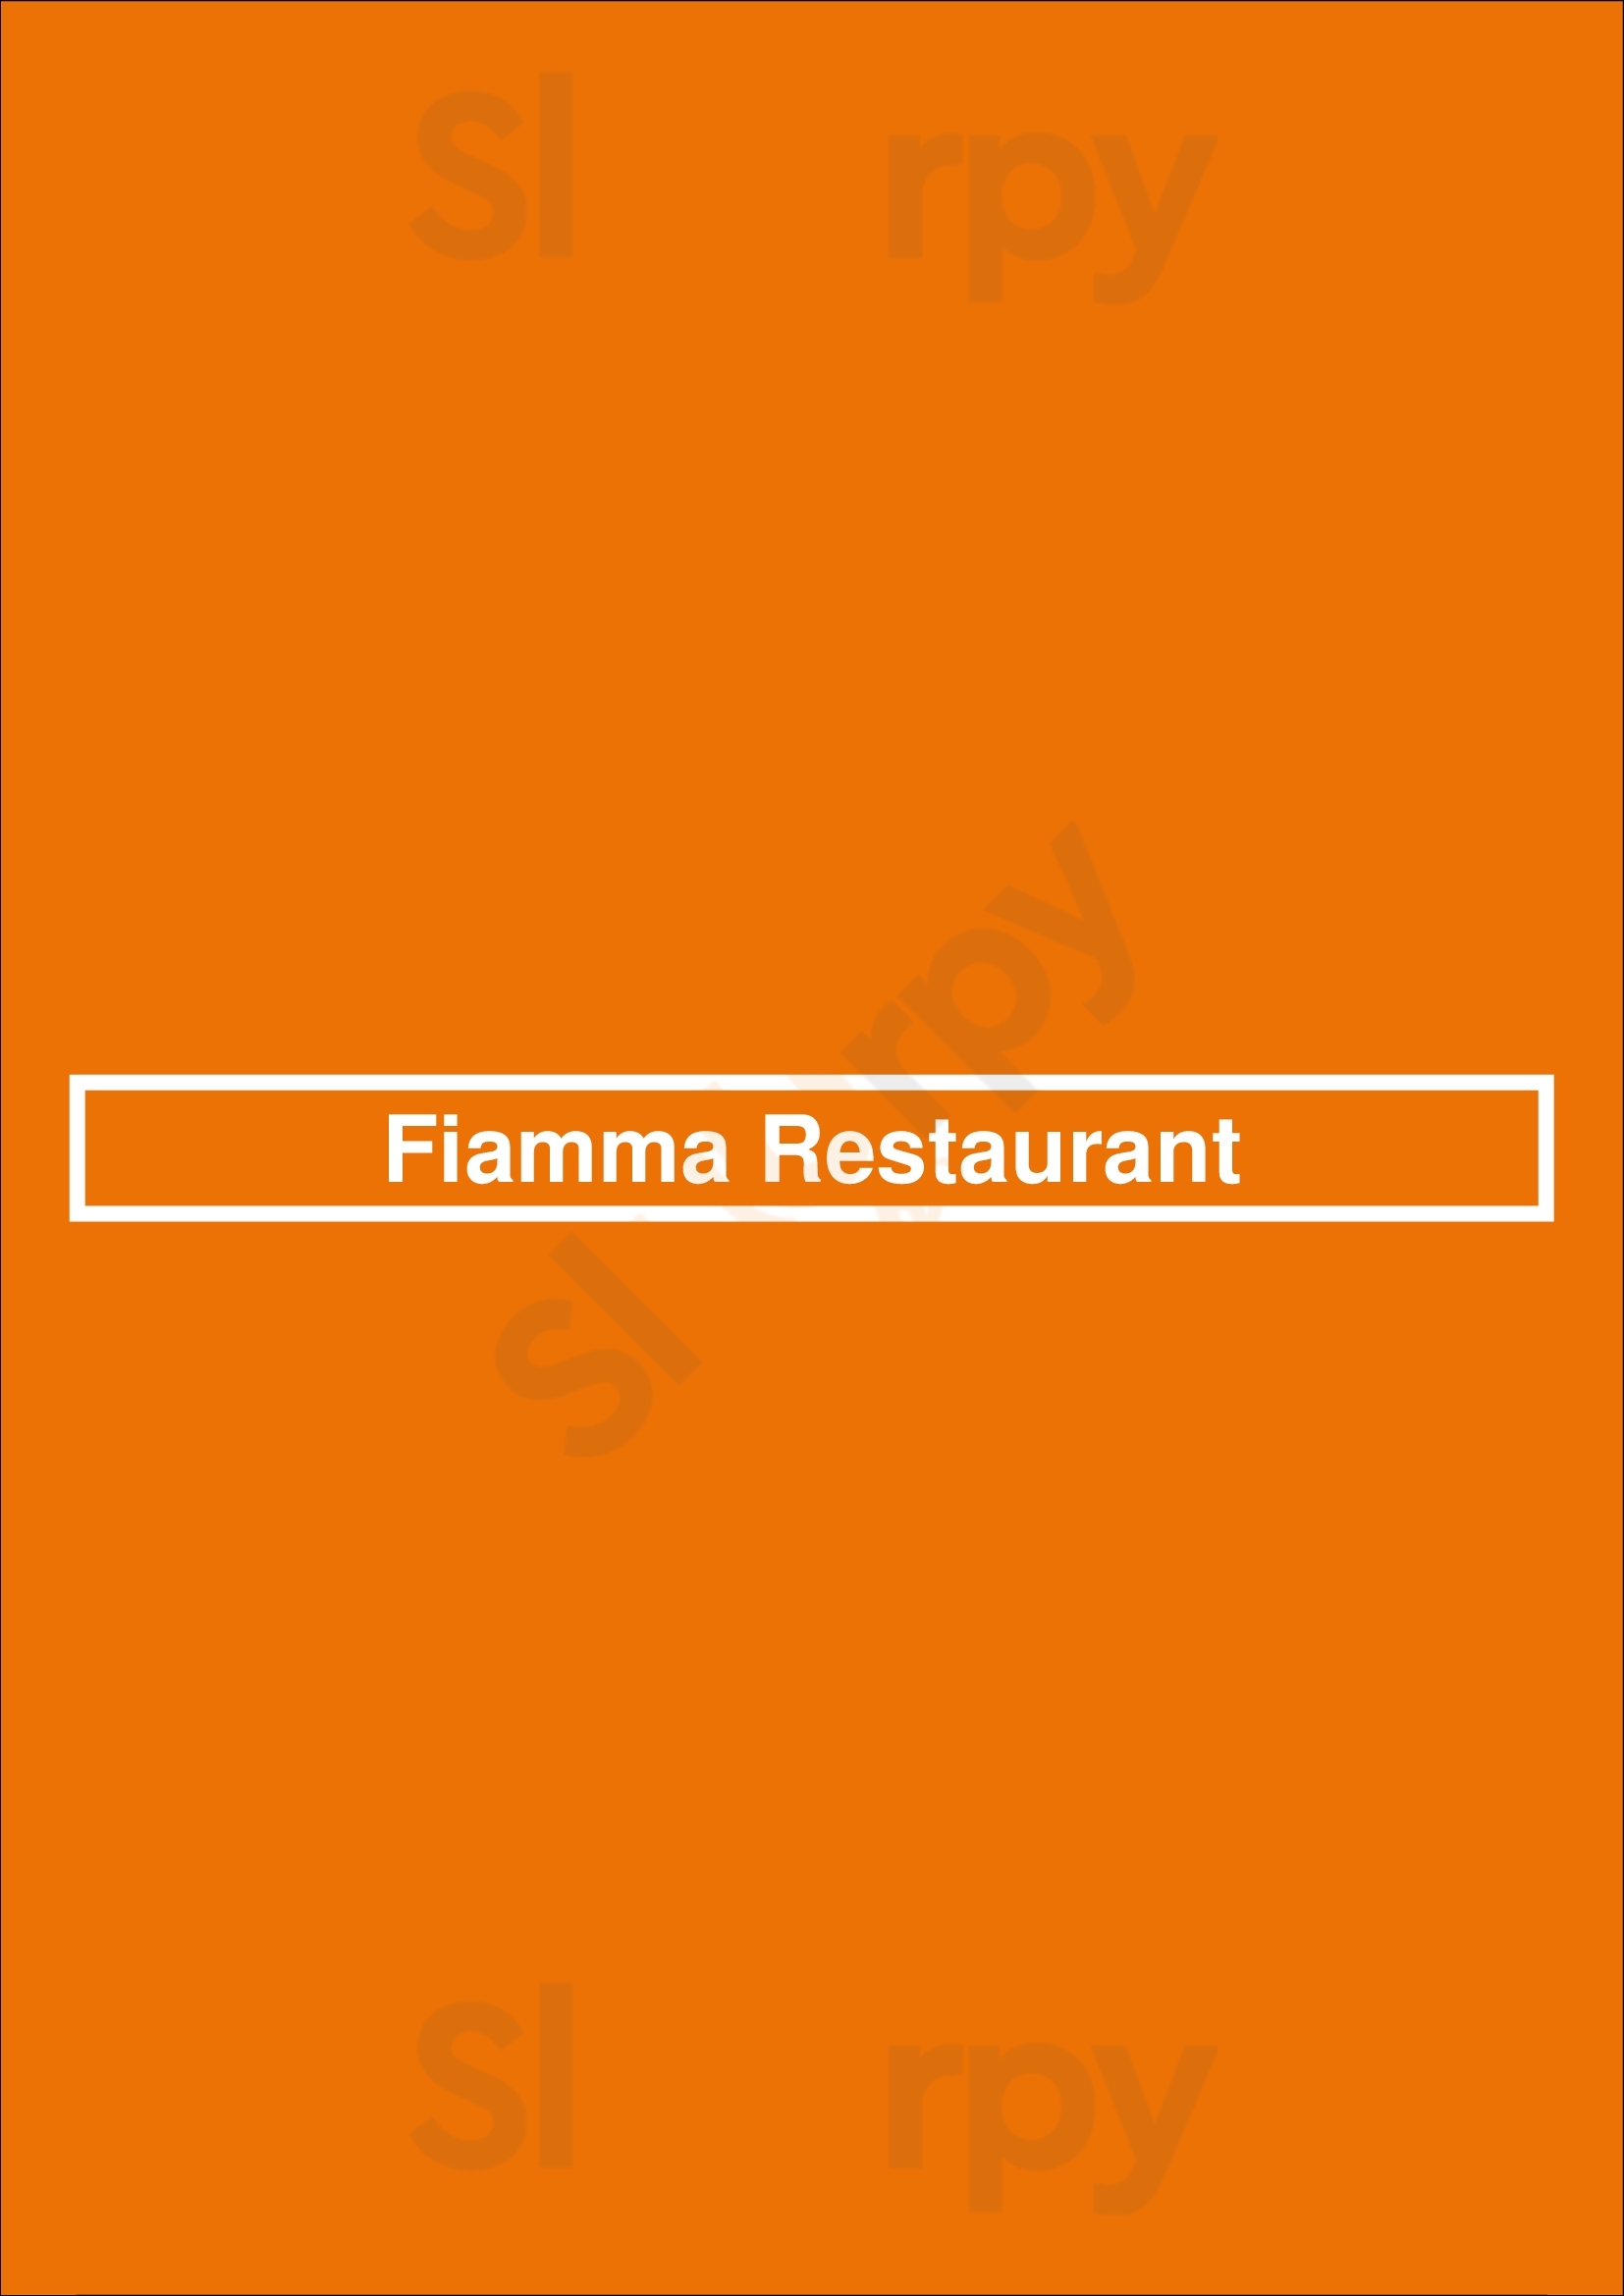 Fiamma Restaurant Charlotte Menu - 1